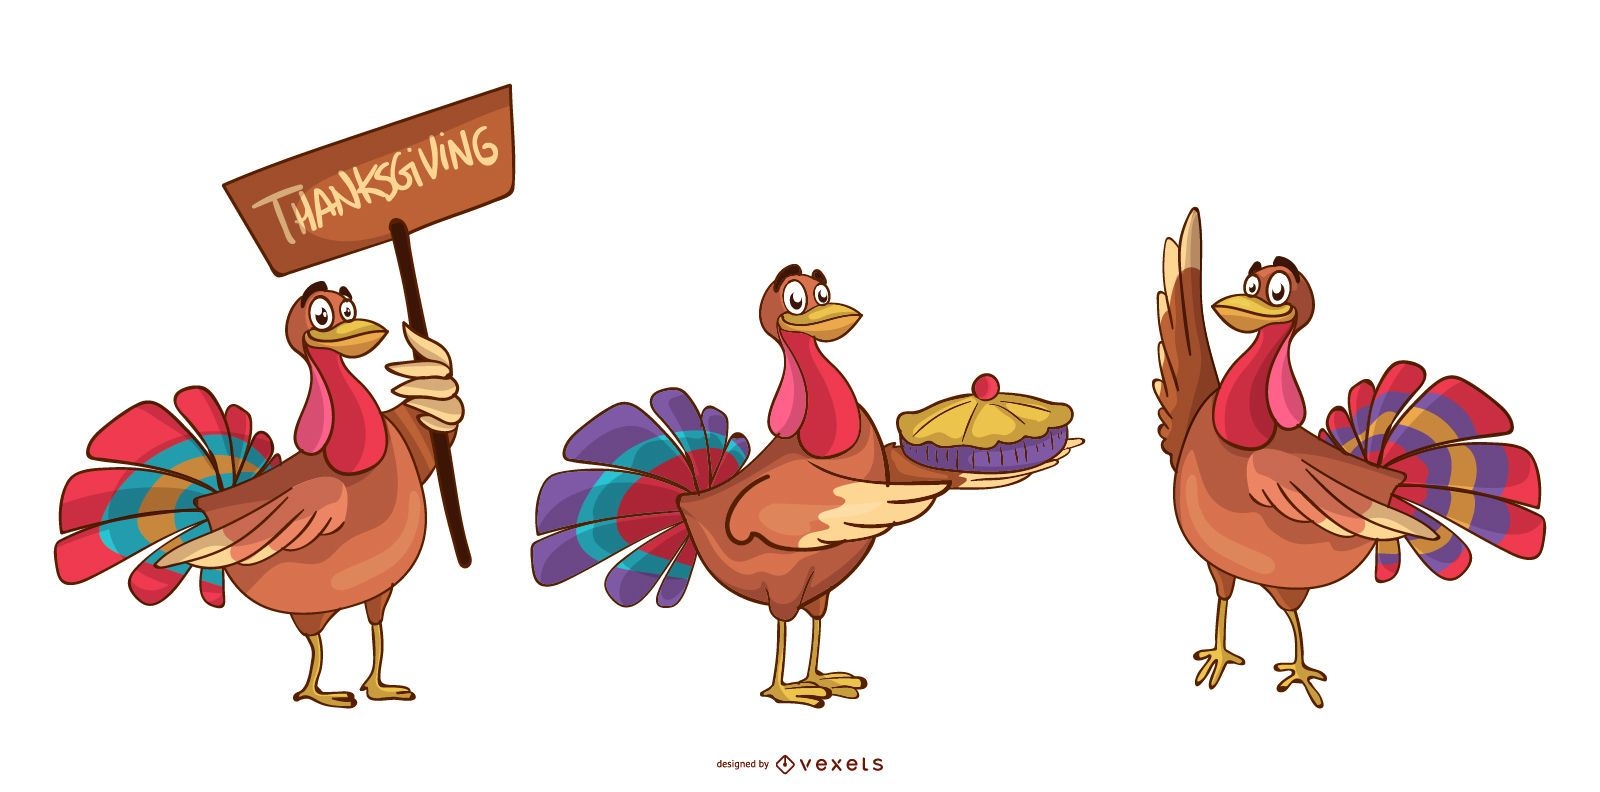 Thanksgiving Truth?hne Cartoon Set